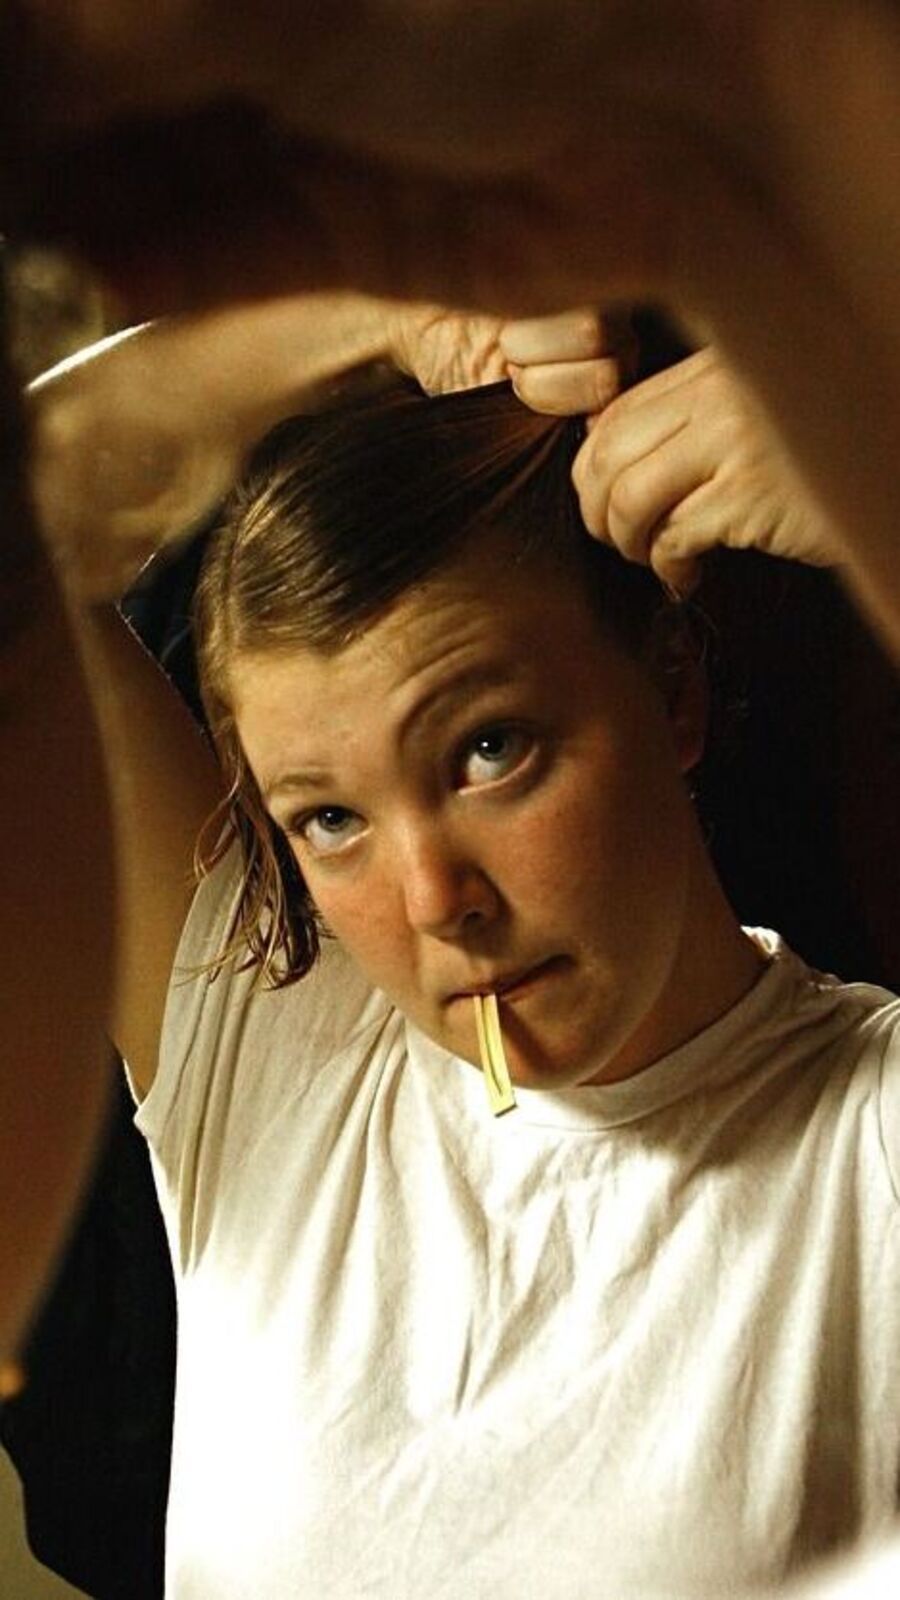 Hair Combing: এইভাবে চুল আঁচড়ান, আরও ঘন ও মজবুত হবে চুল